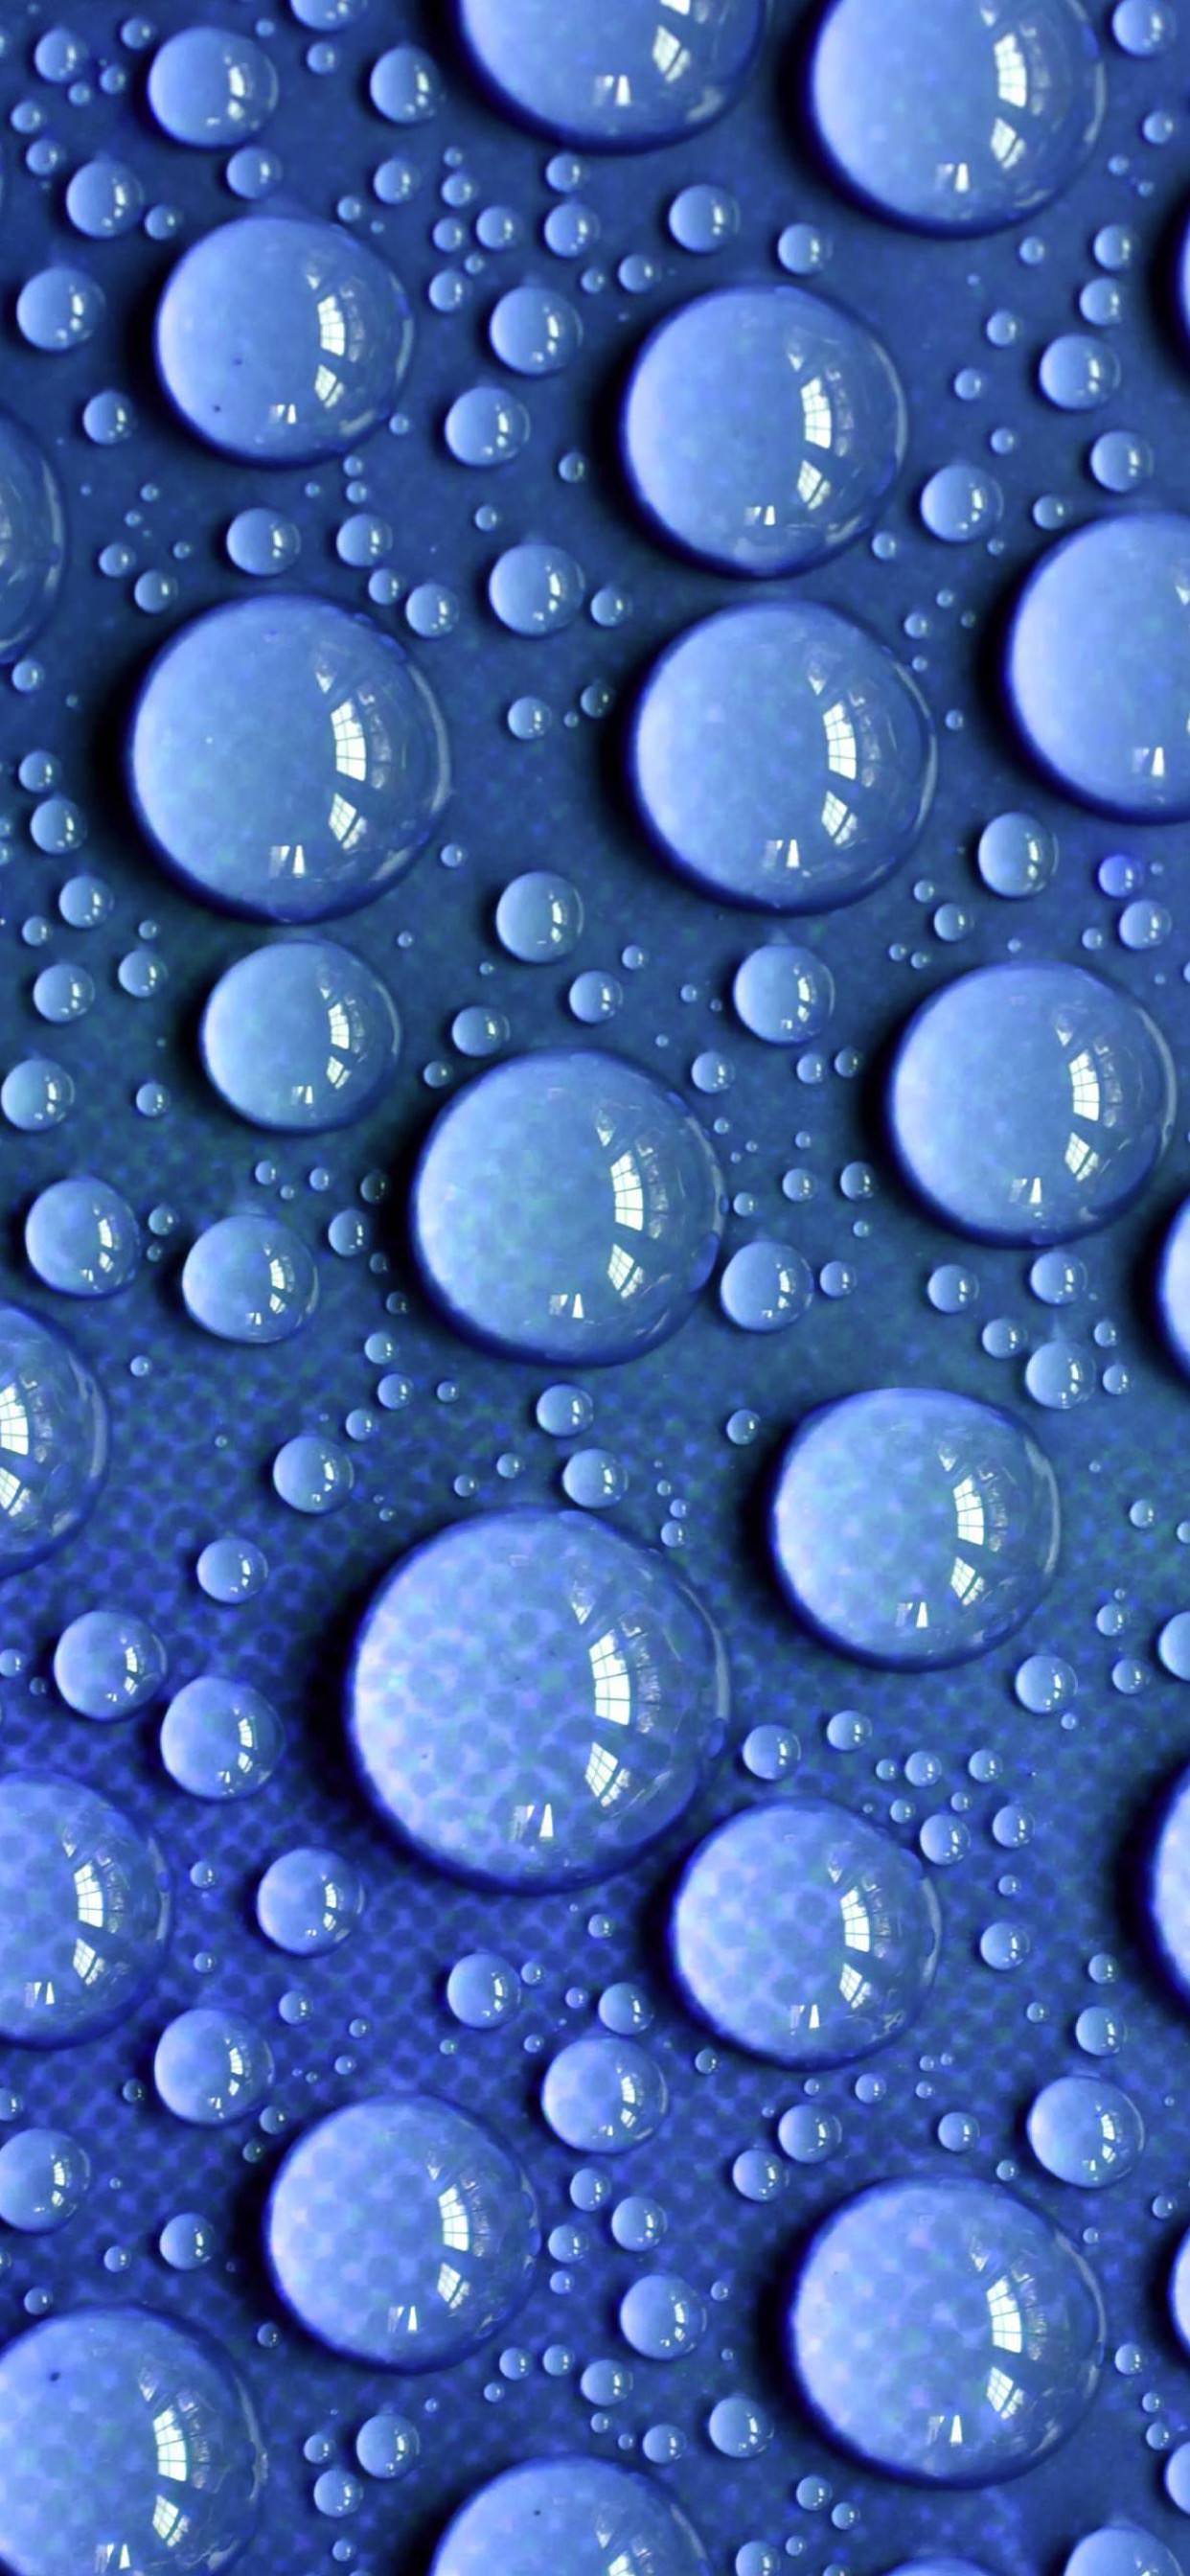 Natural water drops blue  iPhone XS Max